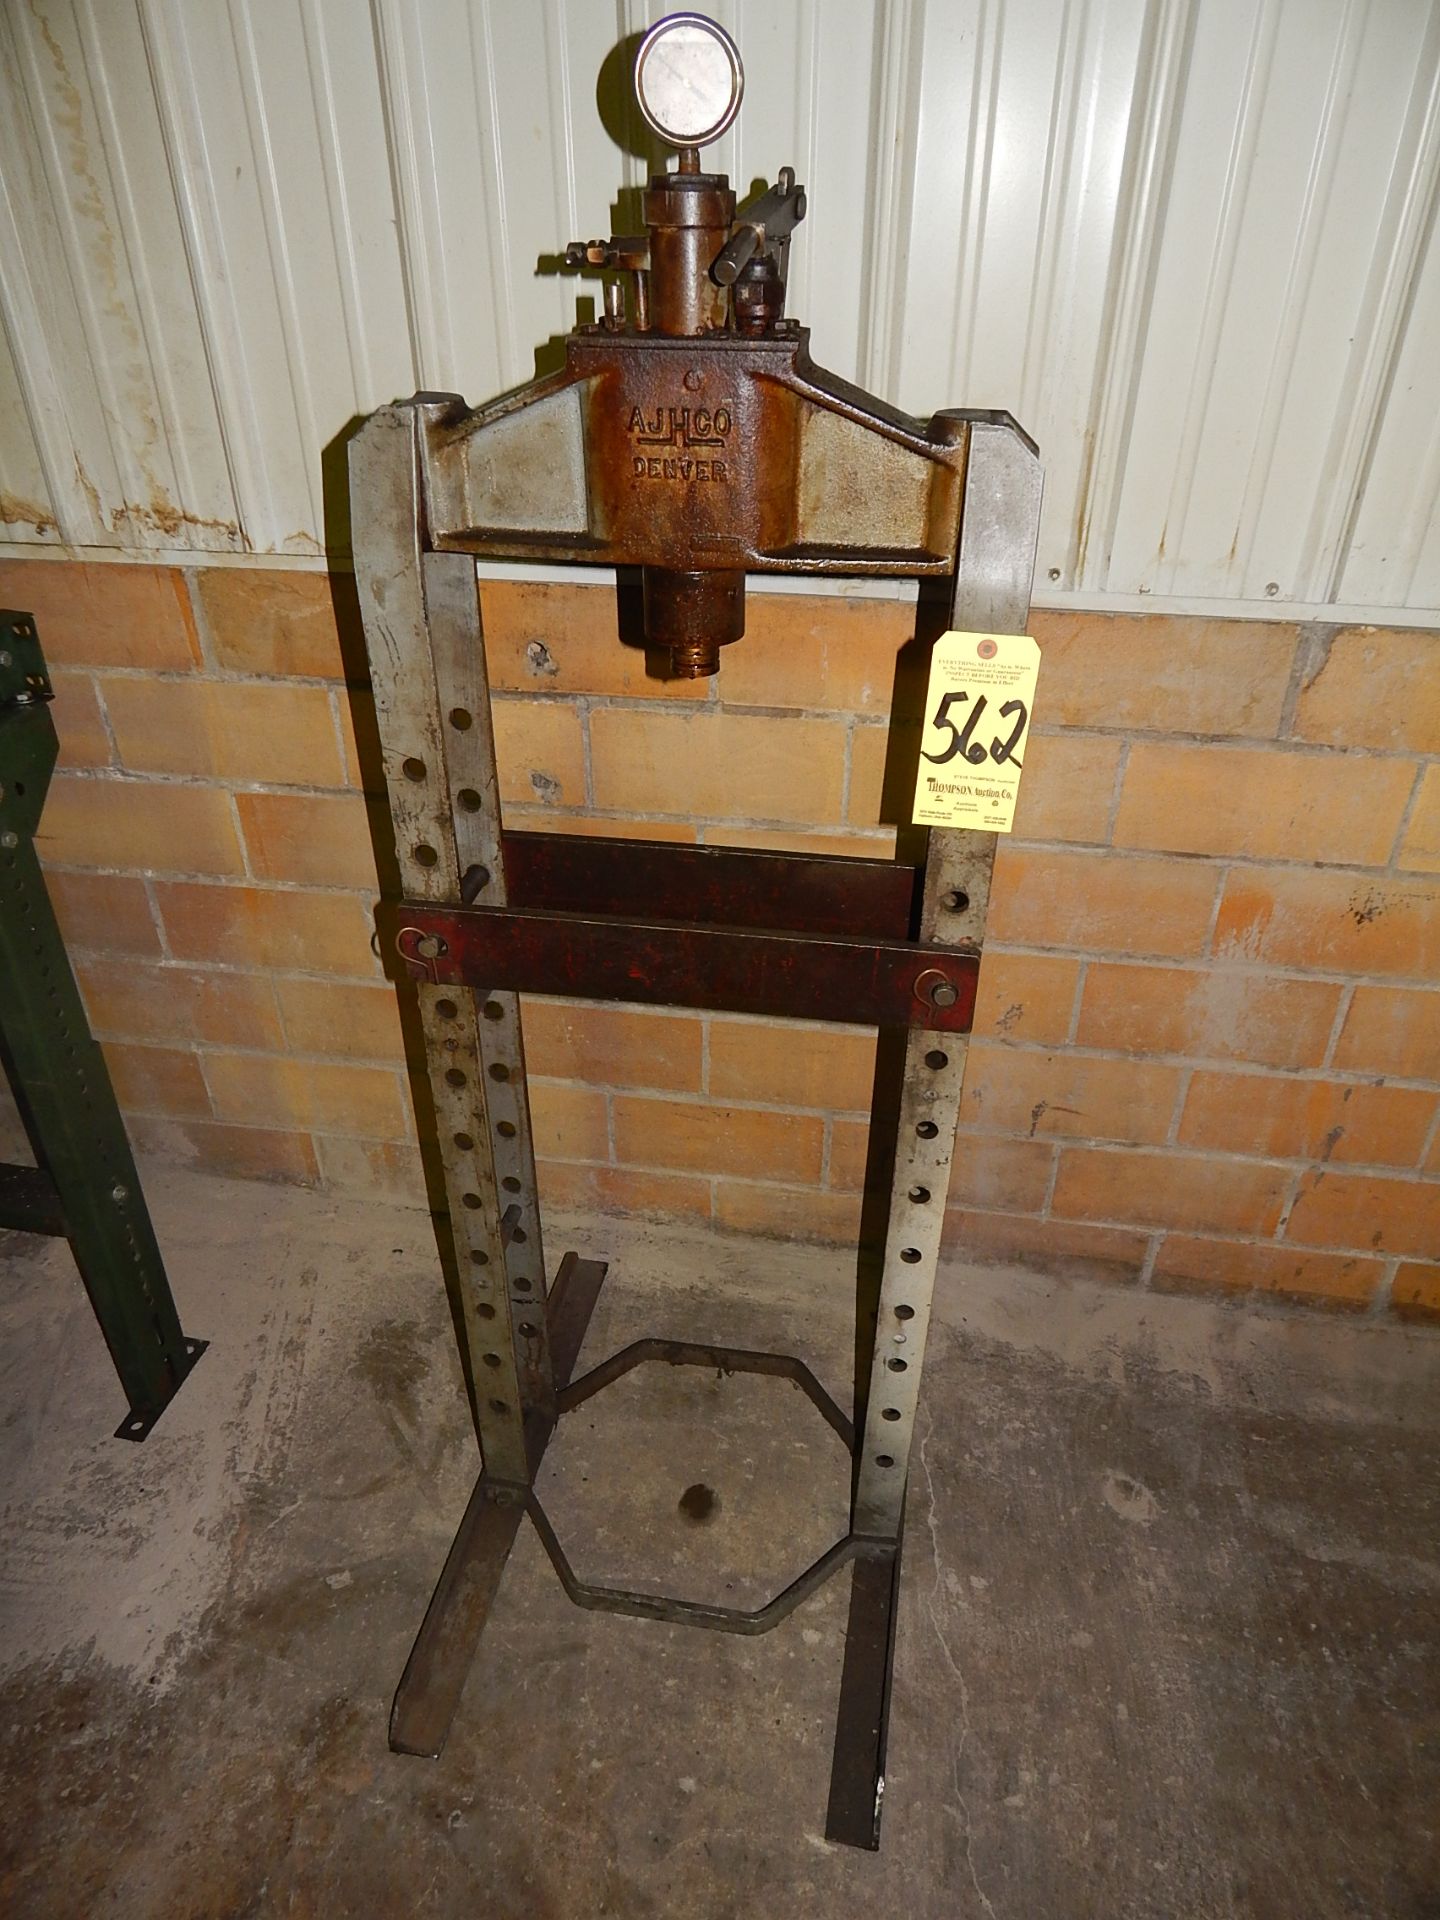 Hand Operated Hydraulic H-Frame Hydraulic Shop Press, Estimated 10 Tons